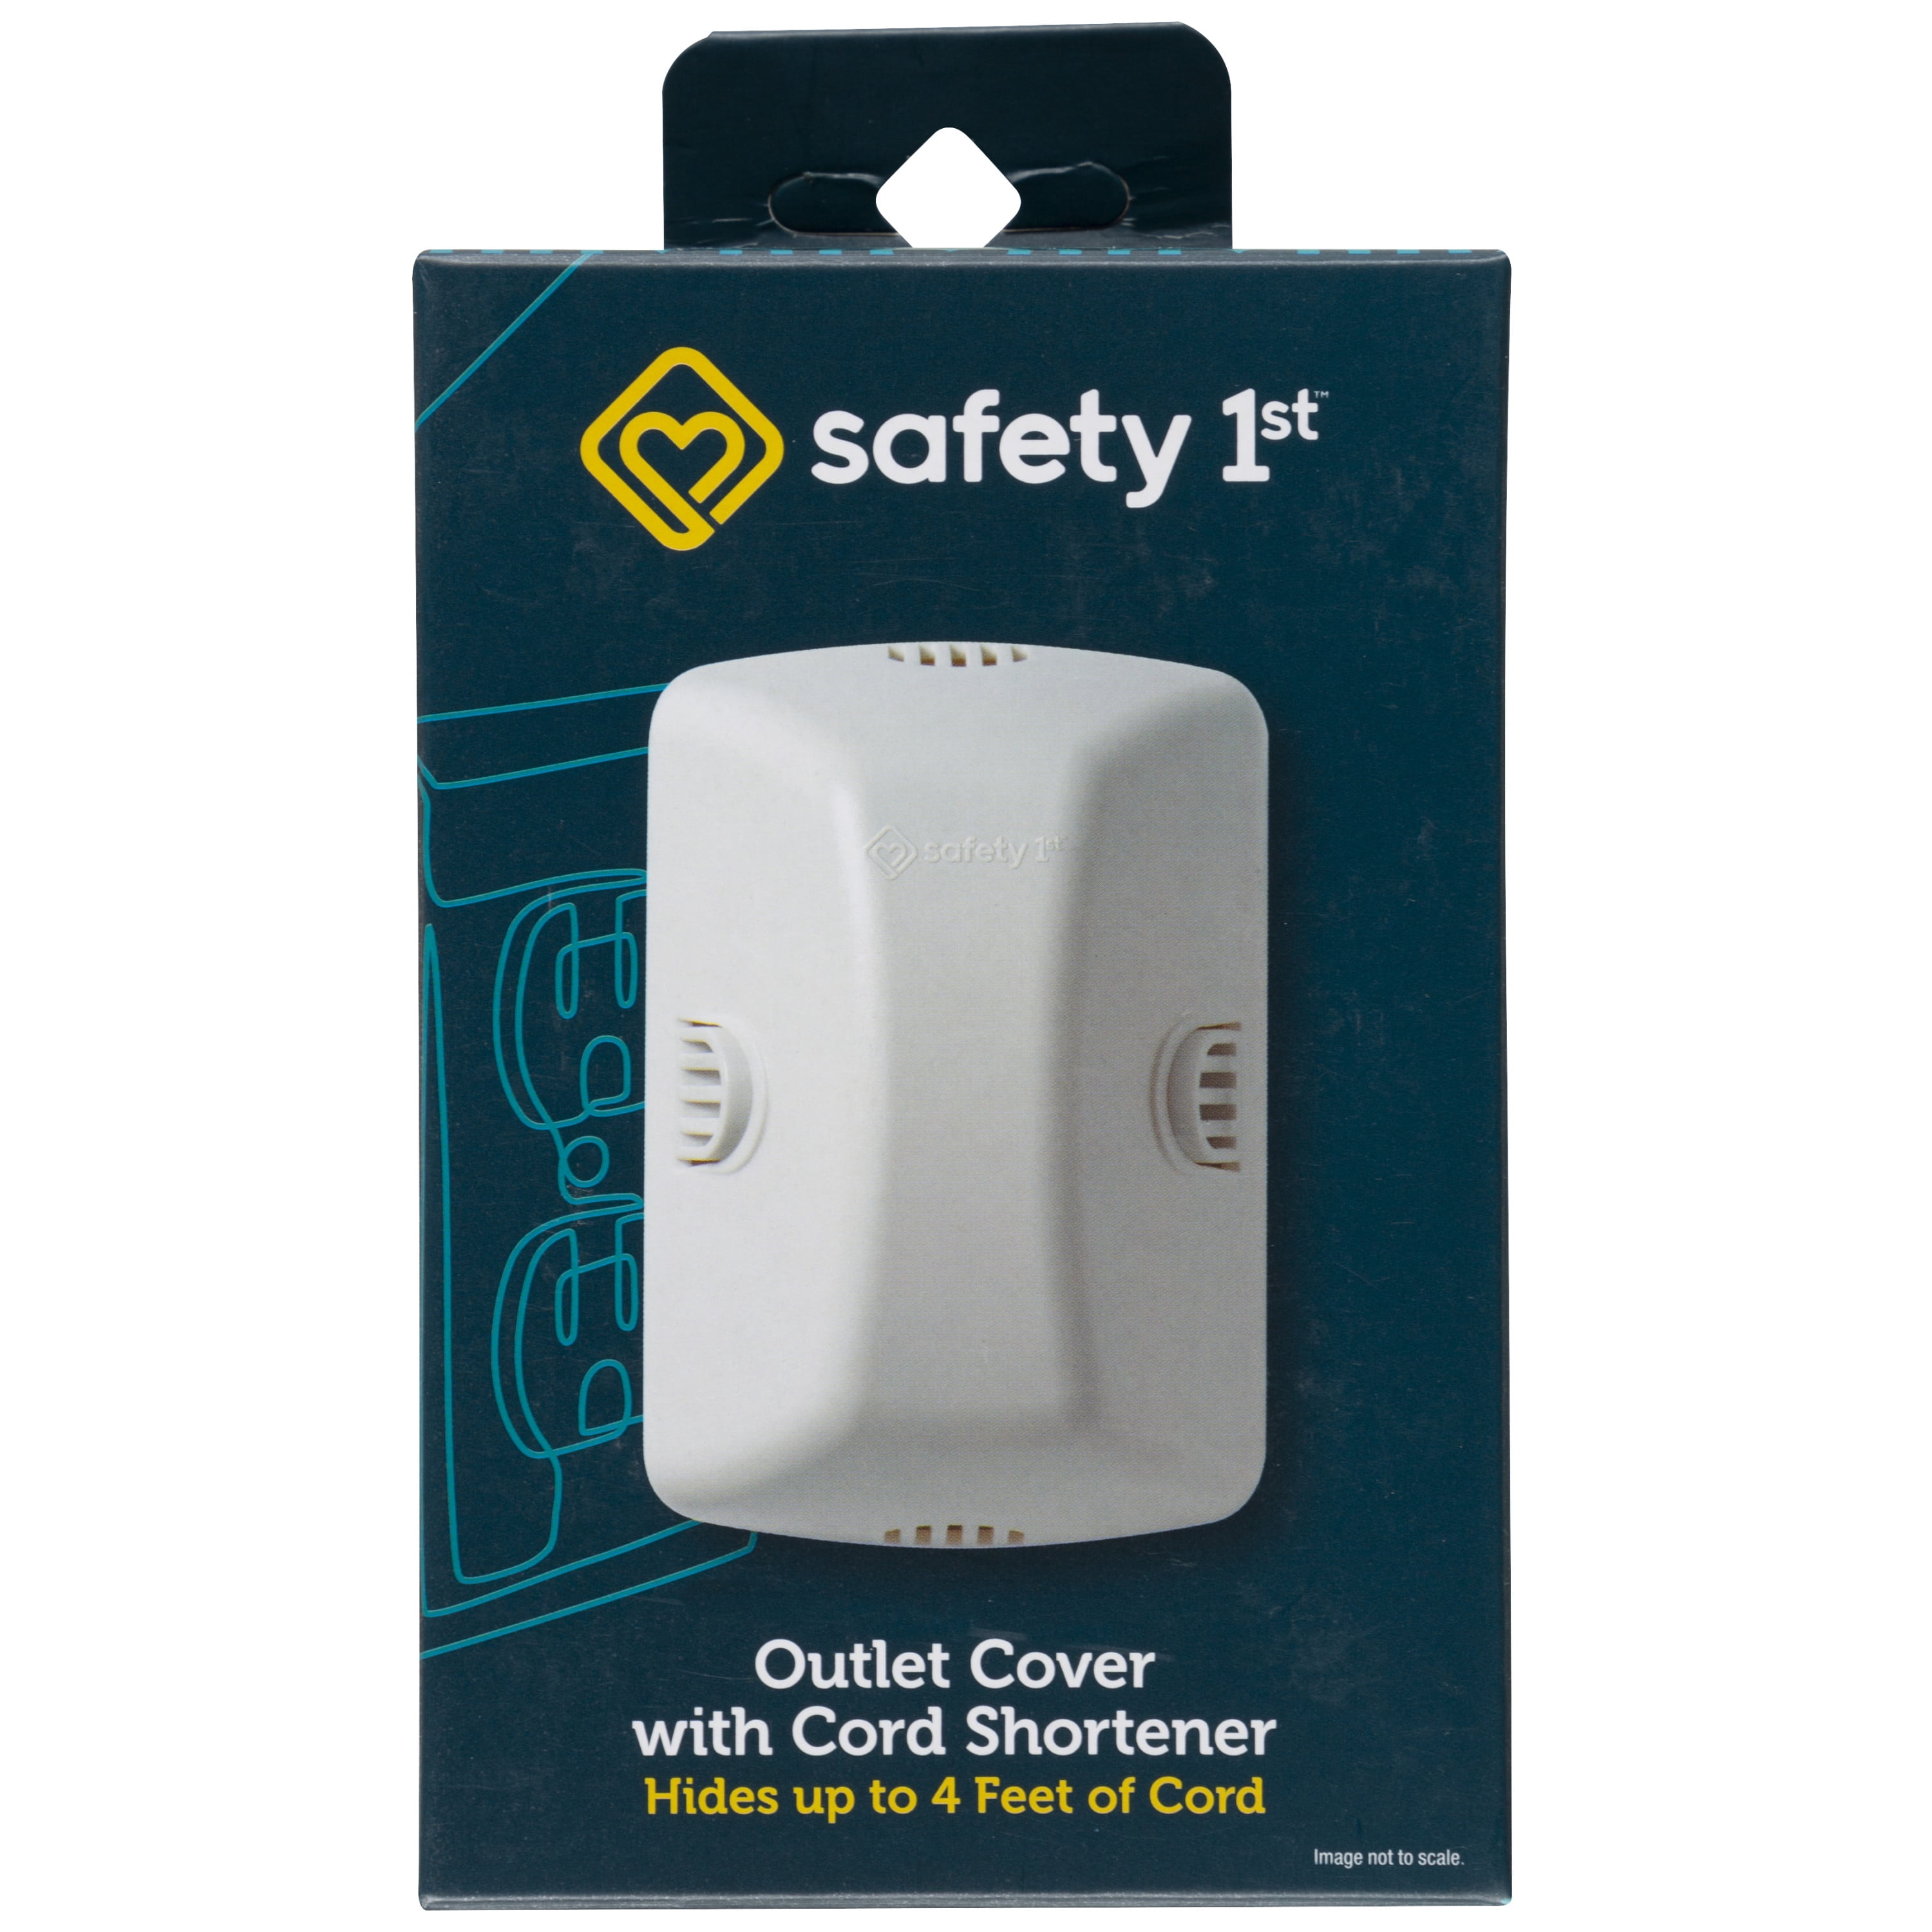 Protector de Enchufes Outlet Cover Cord Shortener Safety 1st - 12